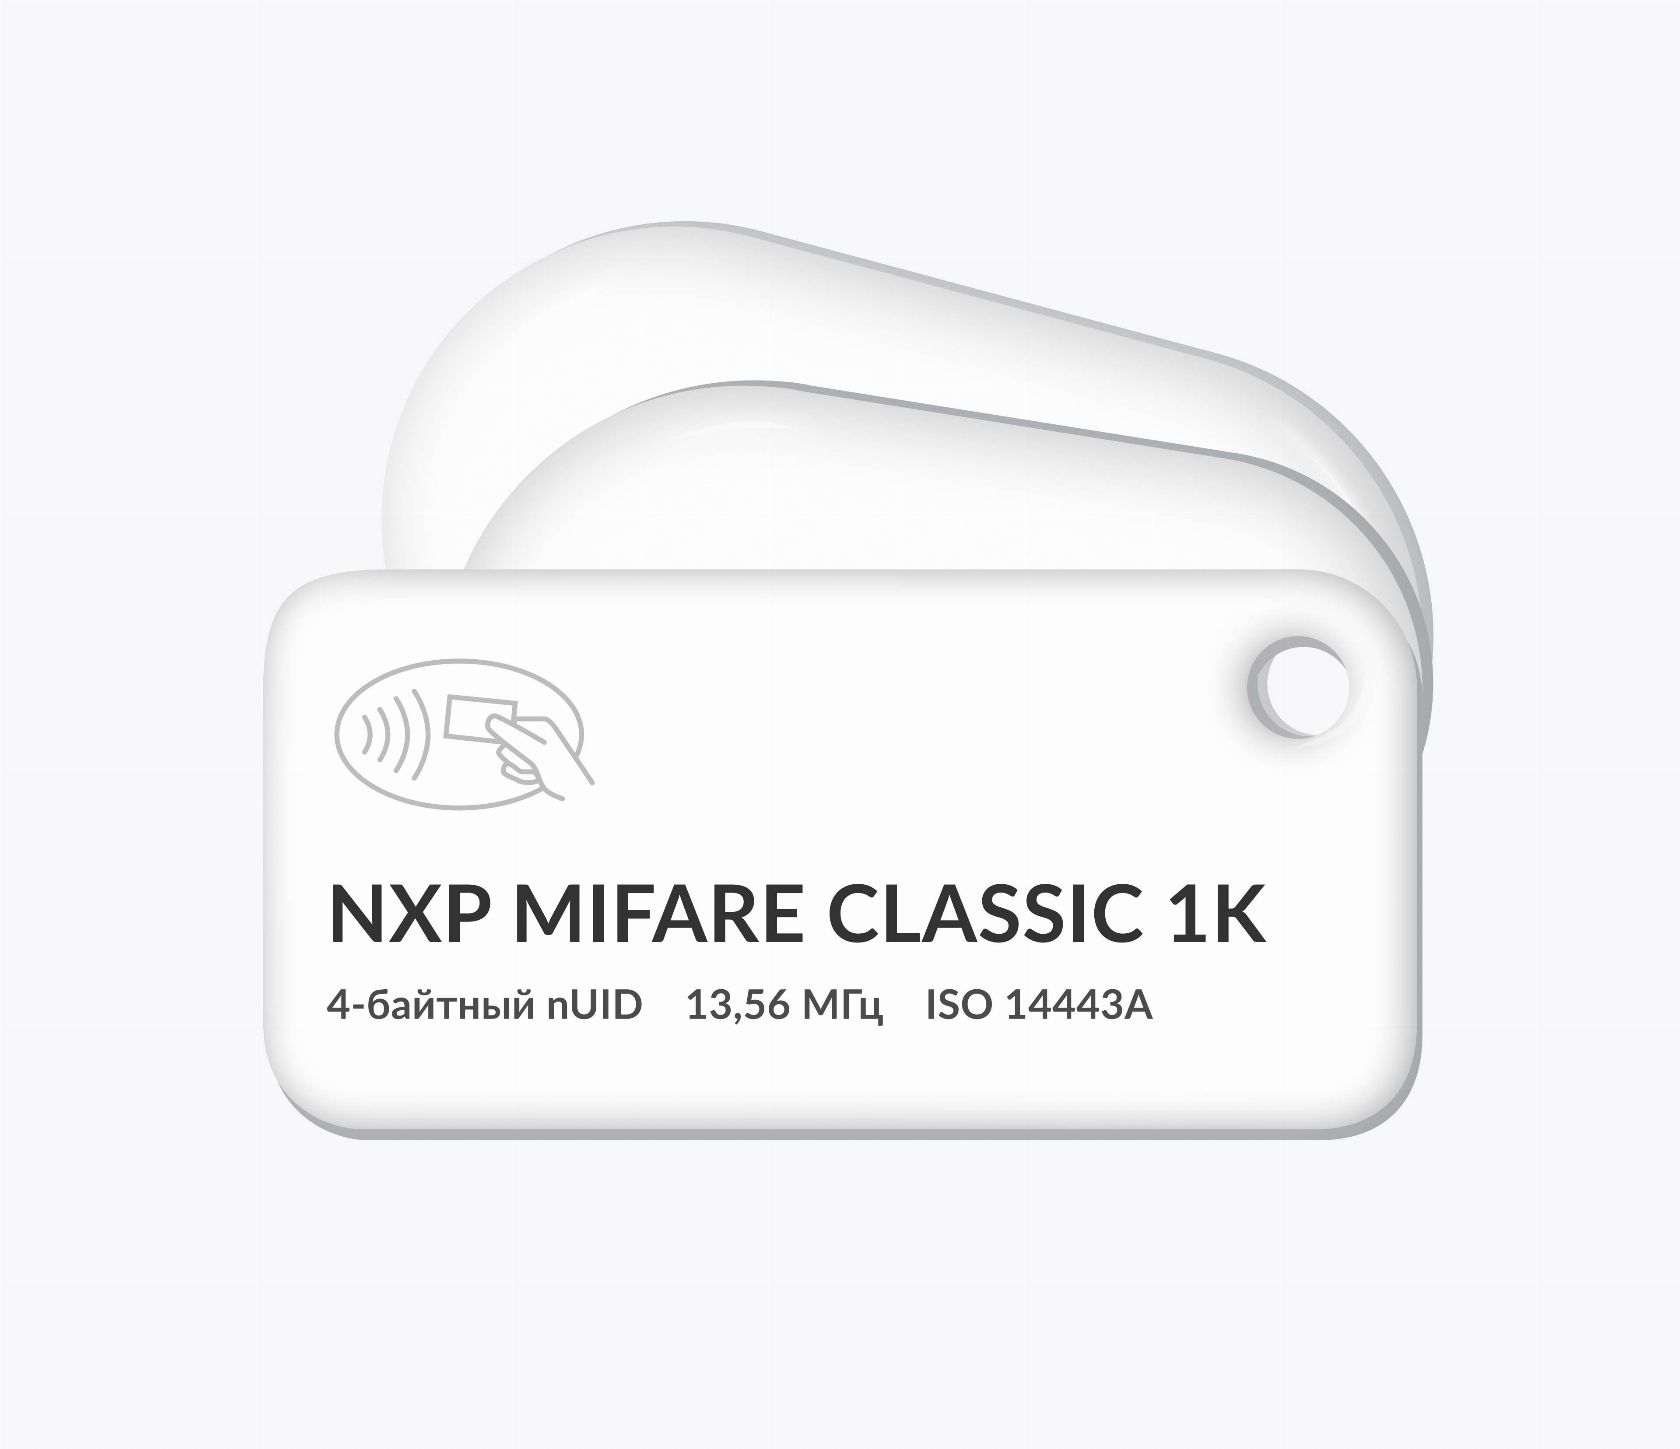 RFID-брелоки с чипом NXP MIFARE Classic 1k 4 byte nUID и вашим логотипом